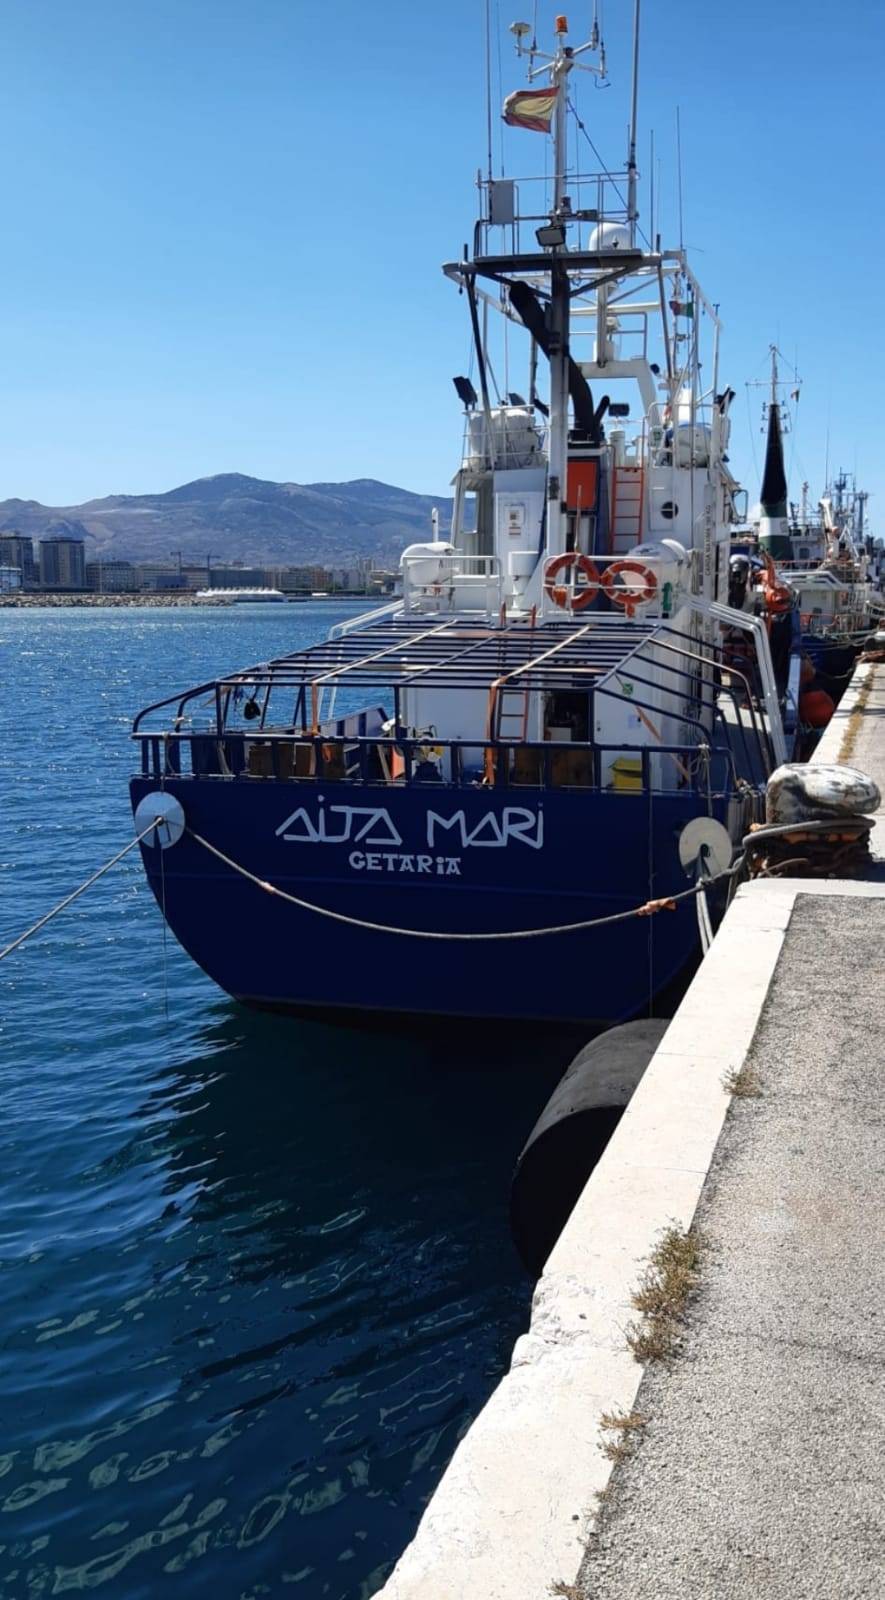 La Aita Mari ci lascia i migranti e torna in Spagna (senza quarantena)